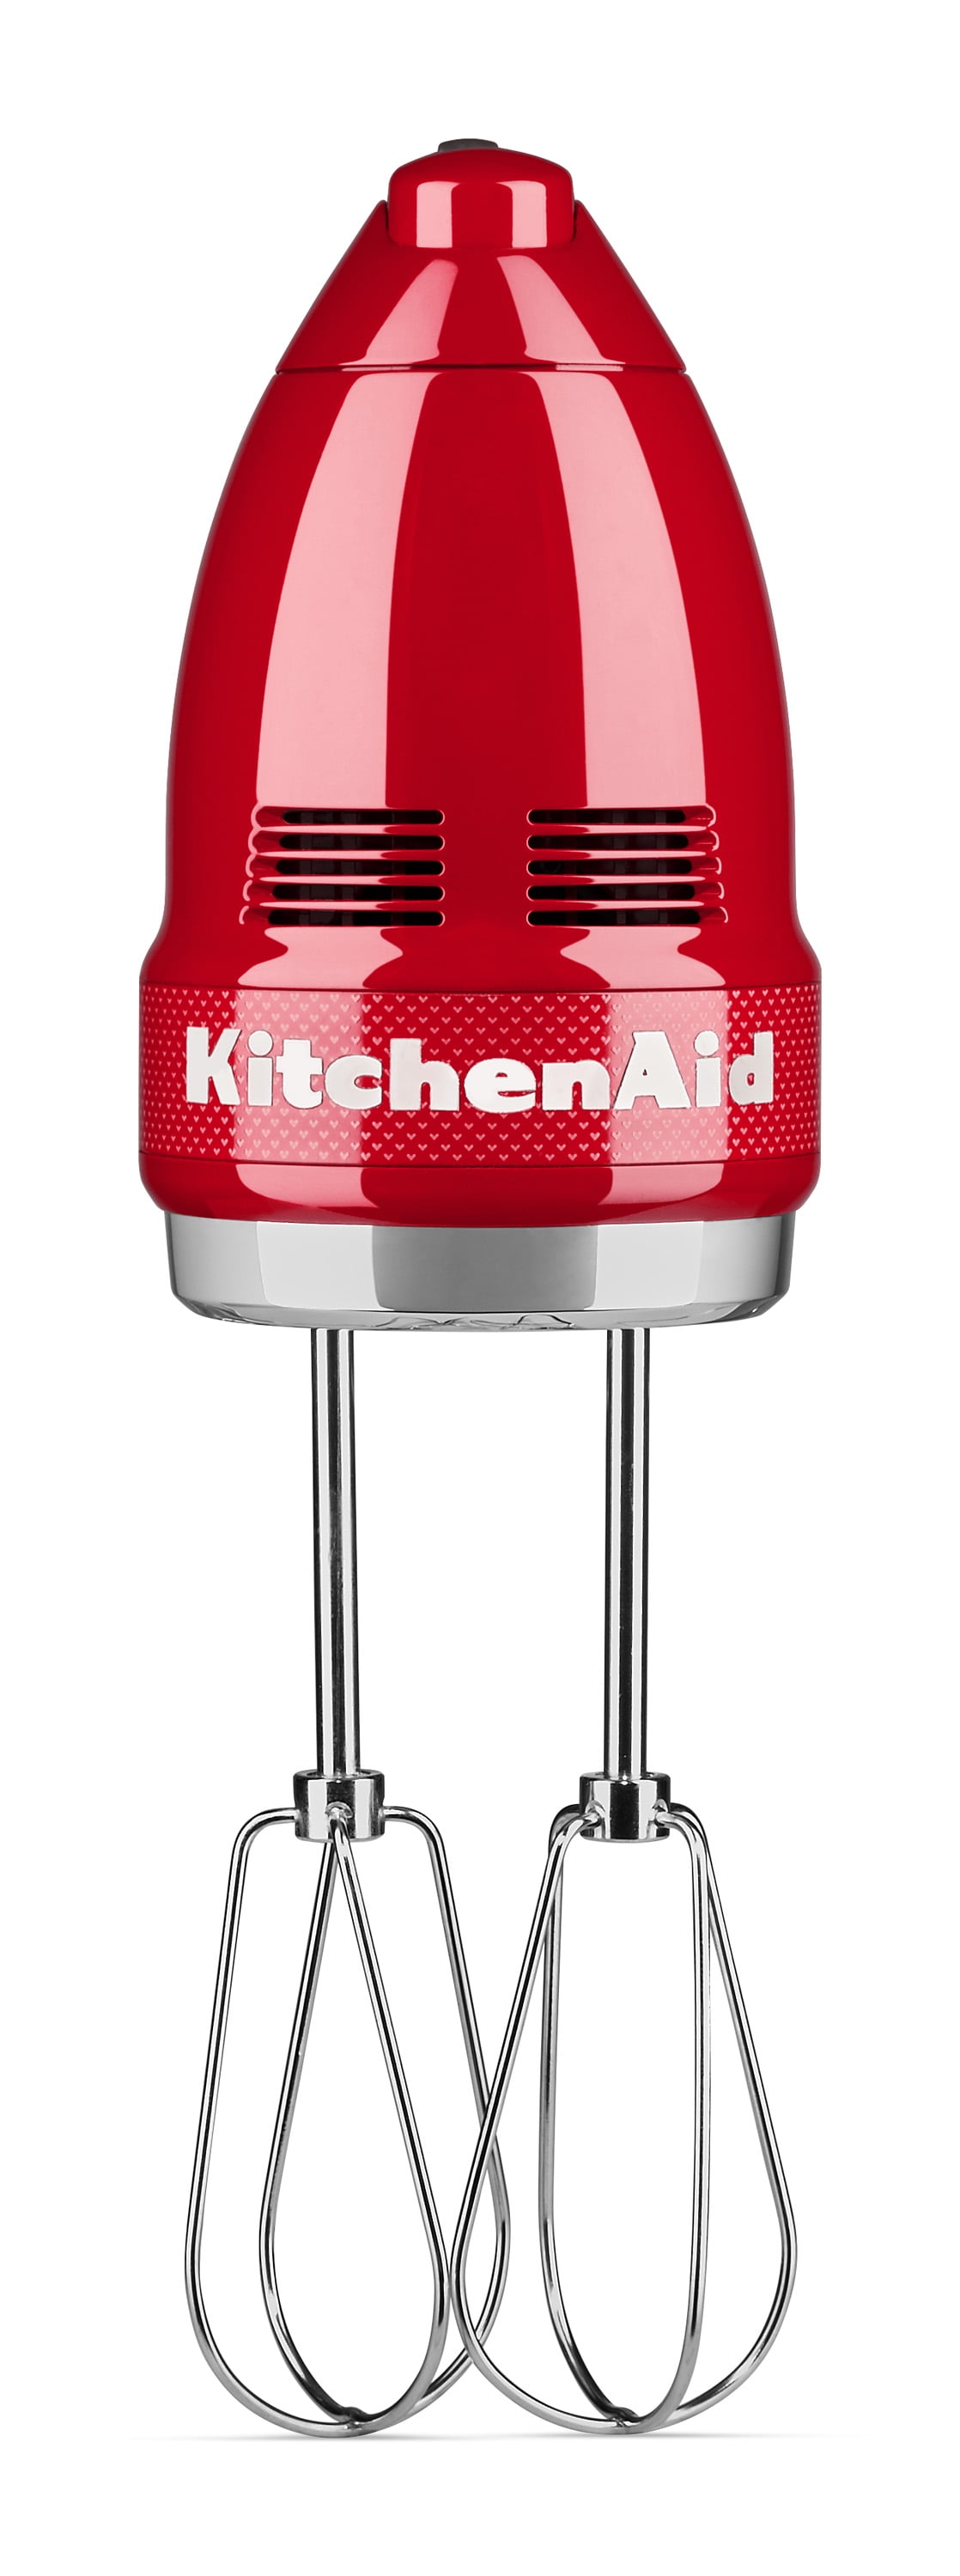 KitchenAid Ultra Power Soft Start 7 Speed Hand Mixer White model KHM7DWH  TESTED